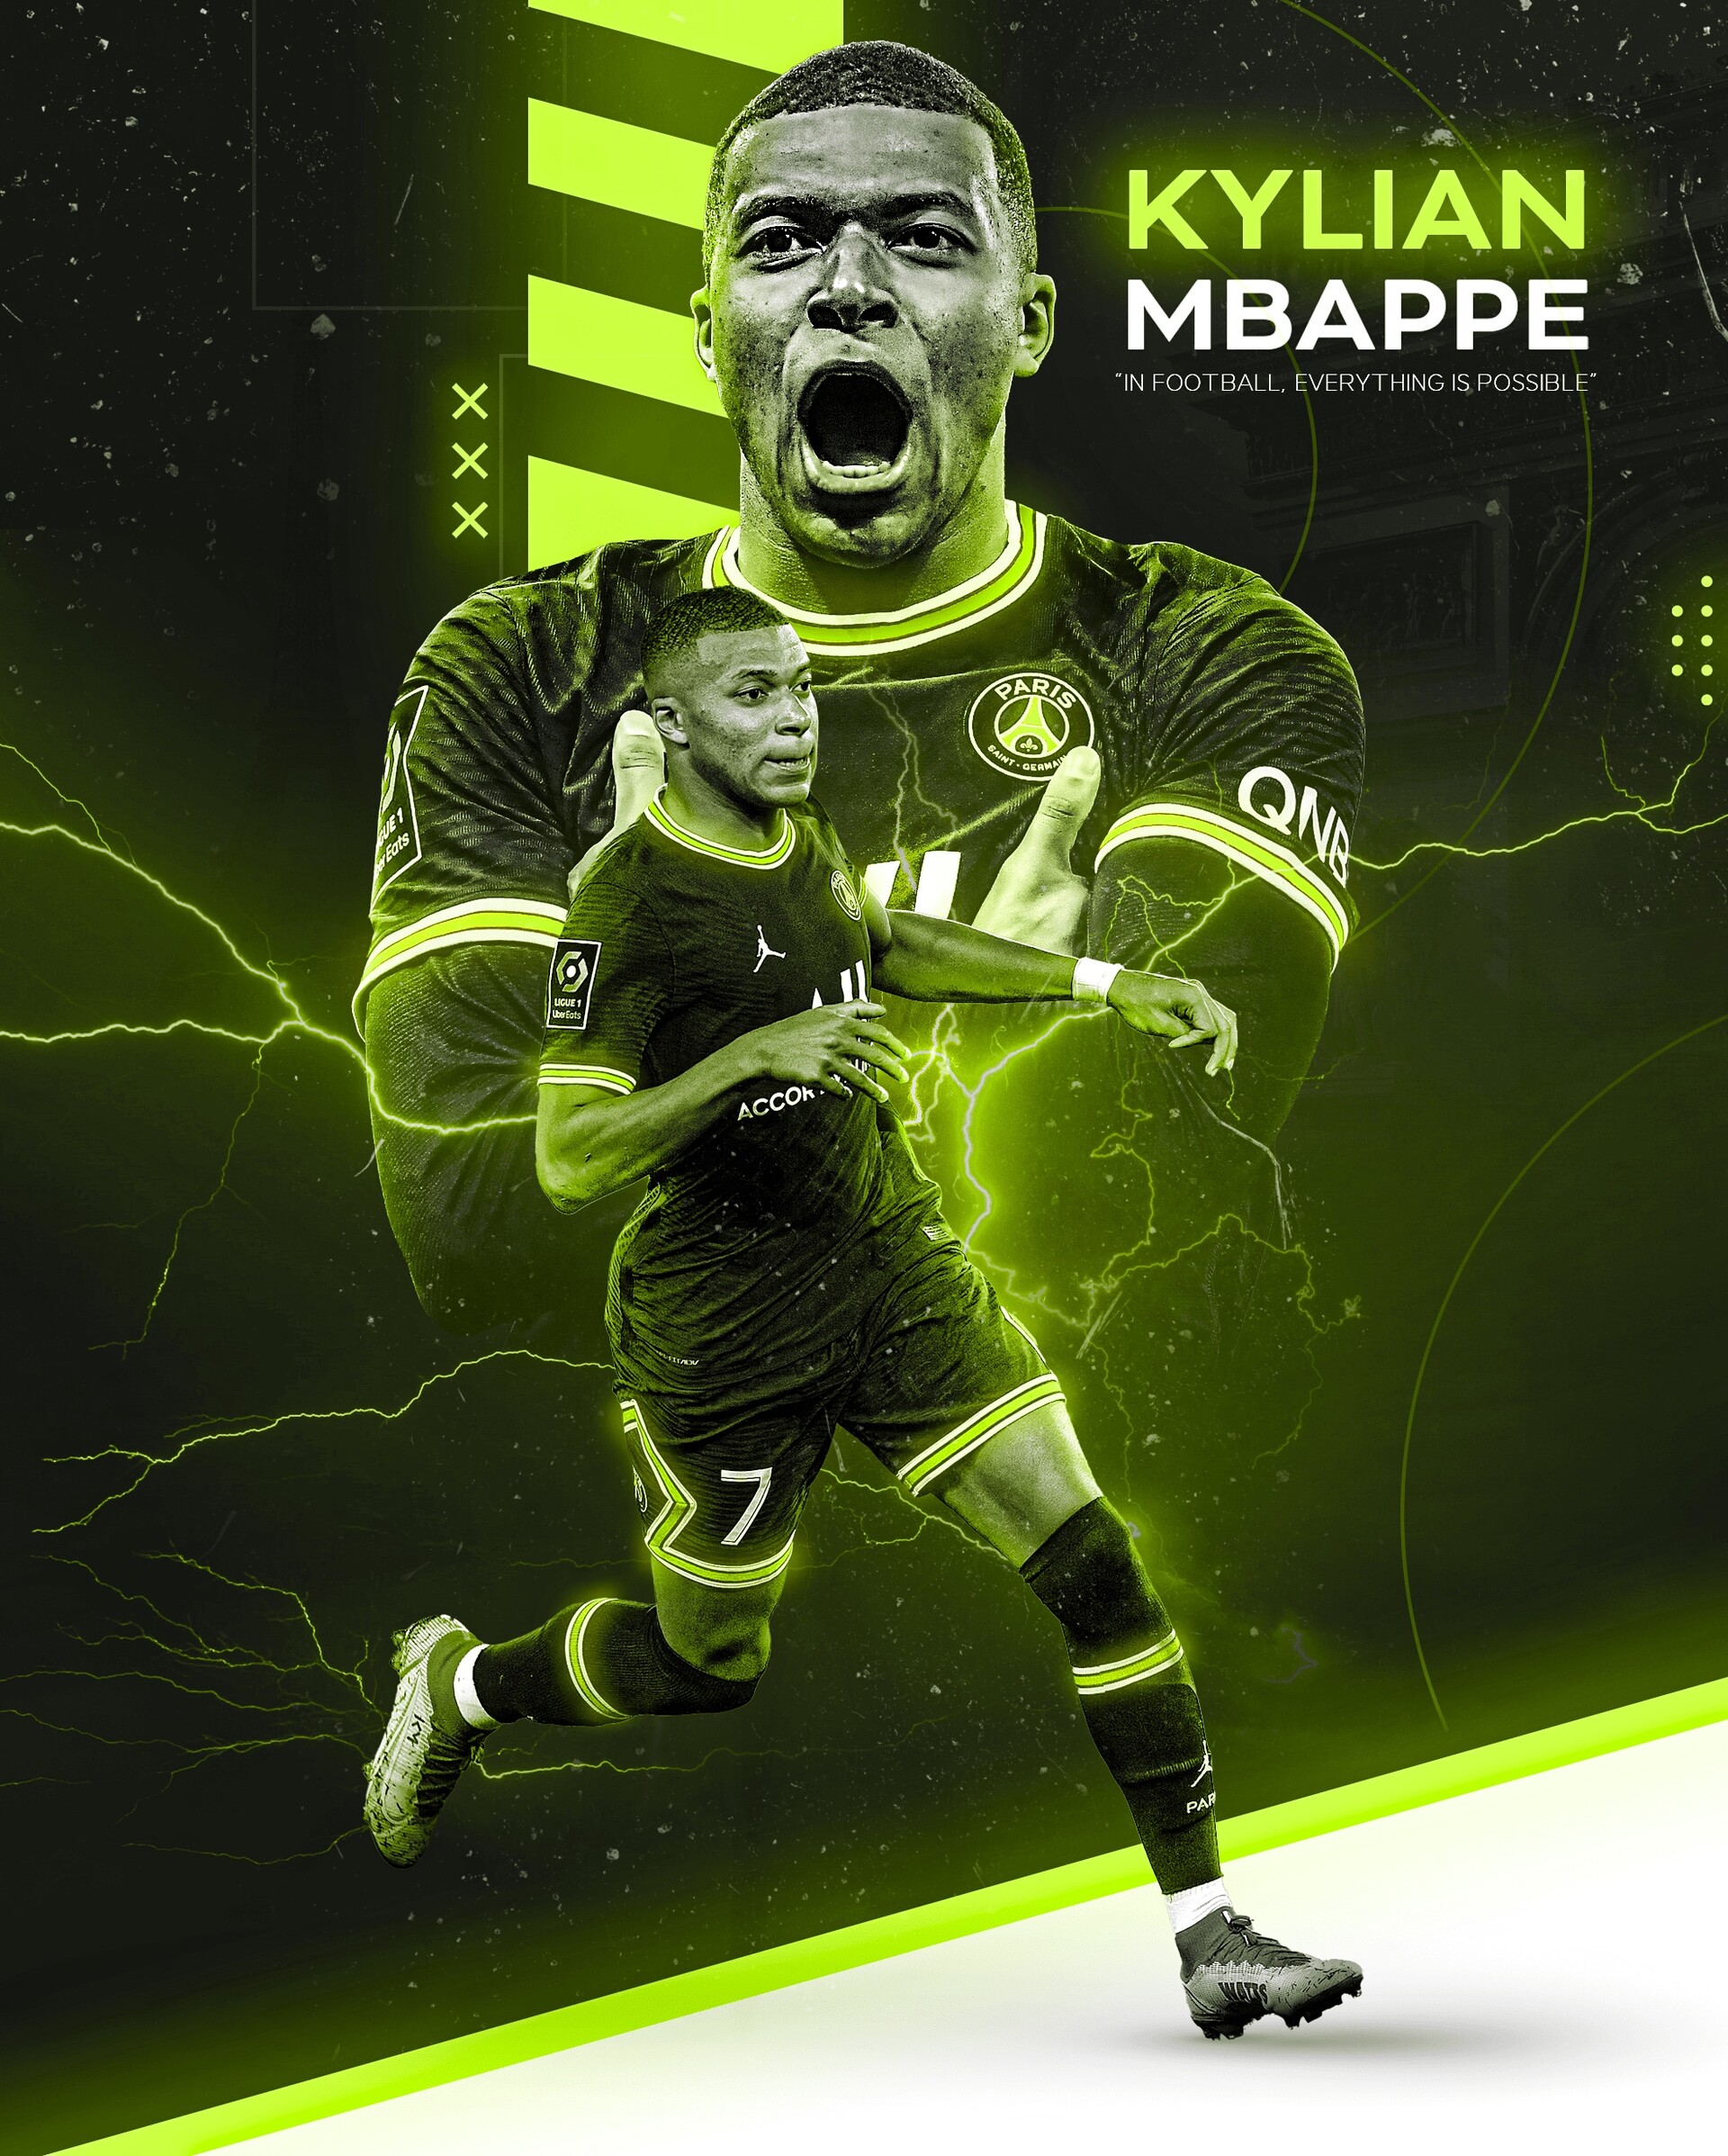 Kylian mbappe sports poster design